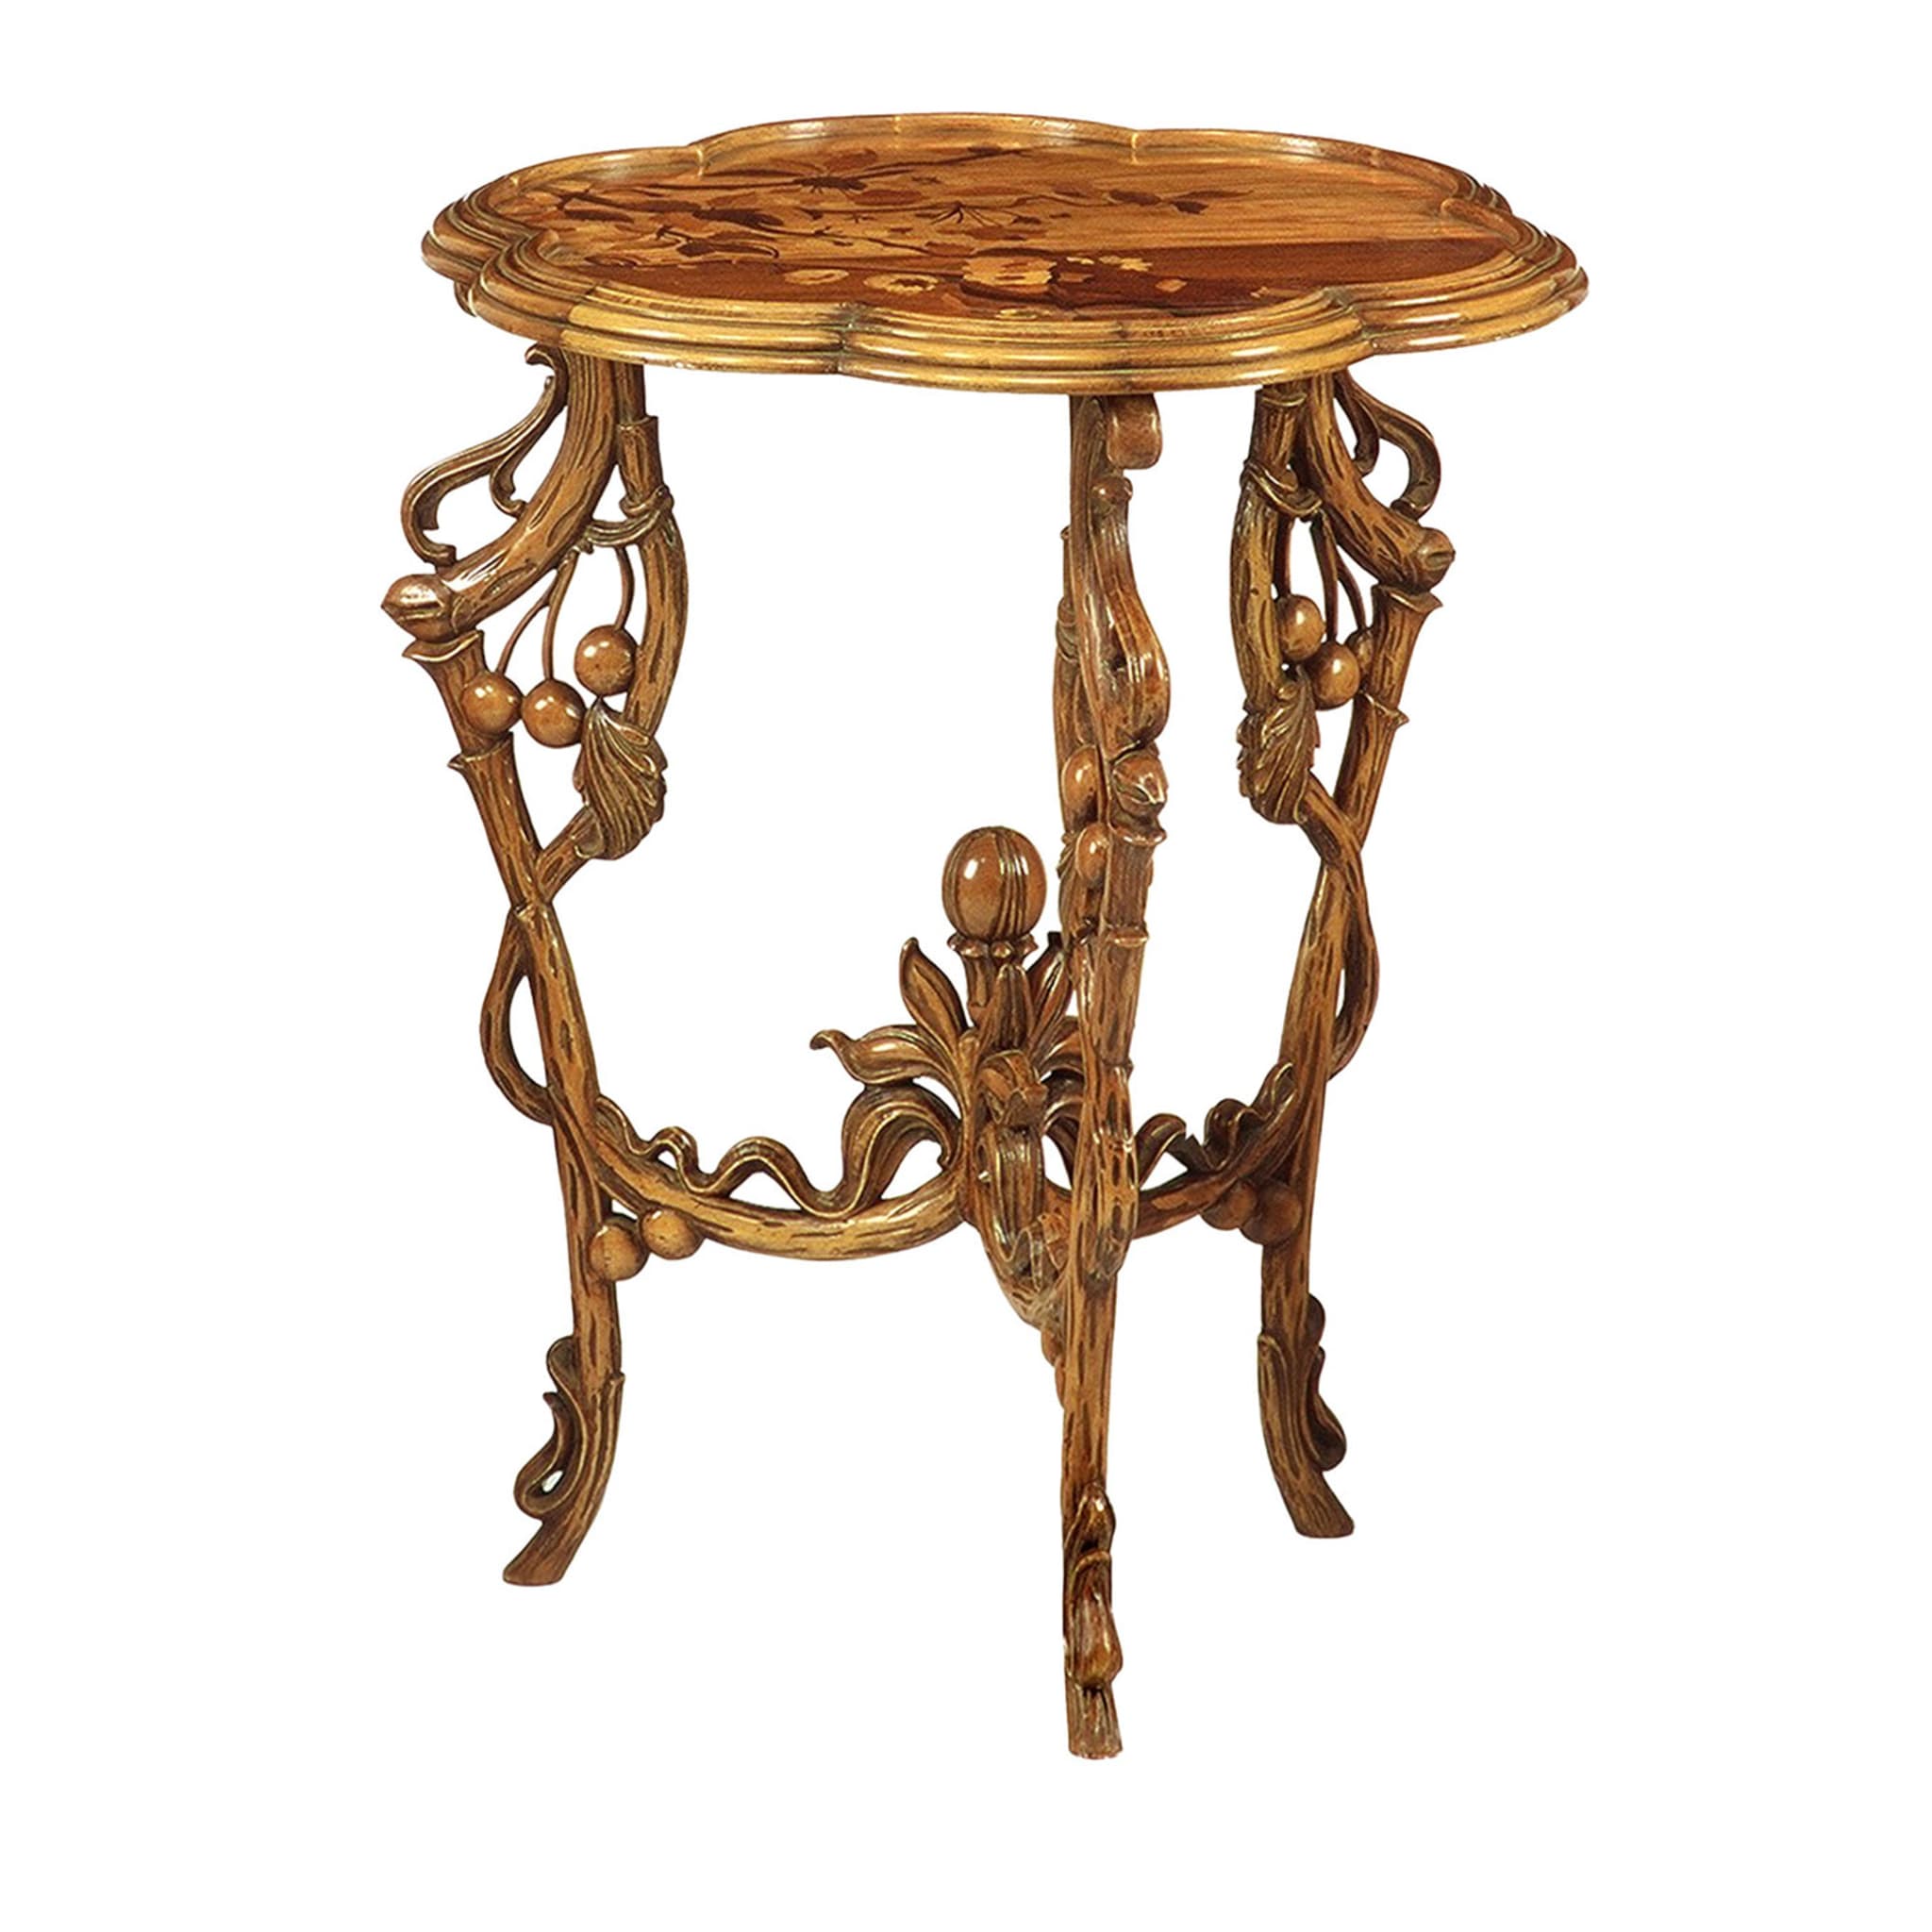 French Art Nouveau-Style Floral Side Table by Emile Gallè - Main view